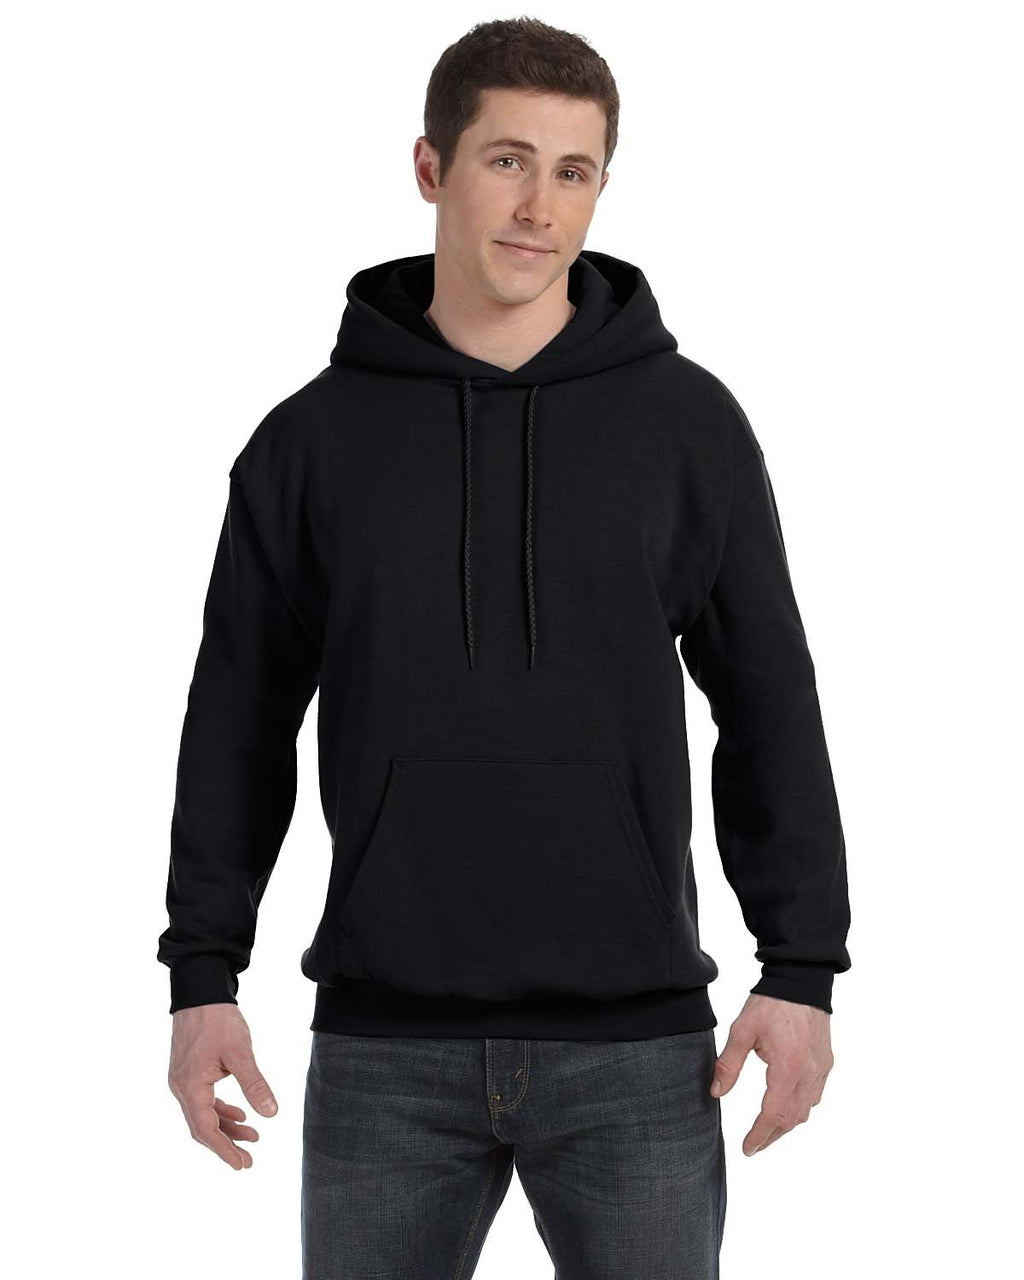 P170- Hanes Ecosmart® 50/50 Sweatshirt